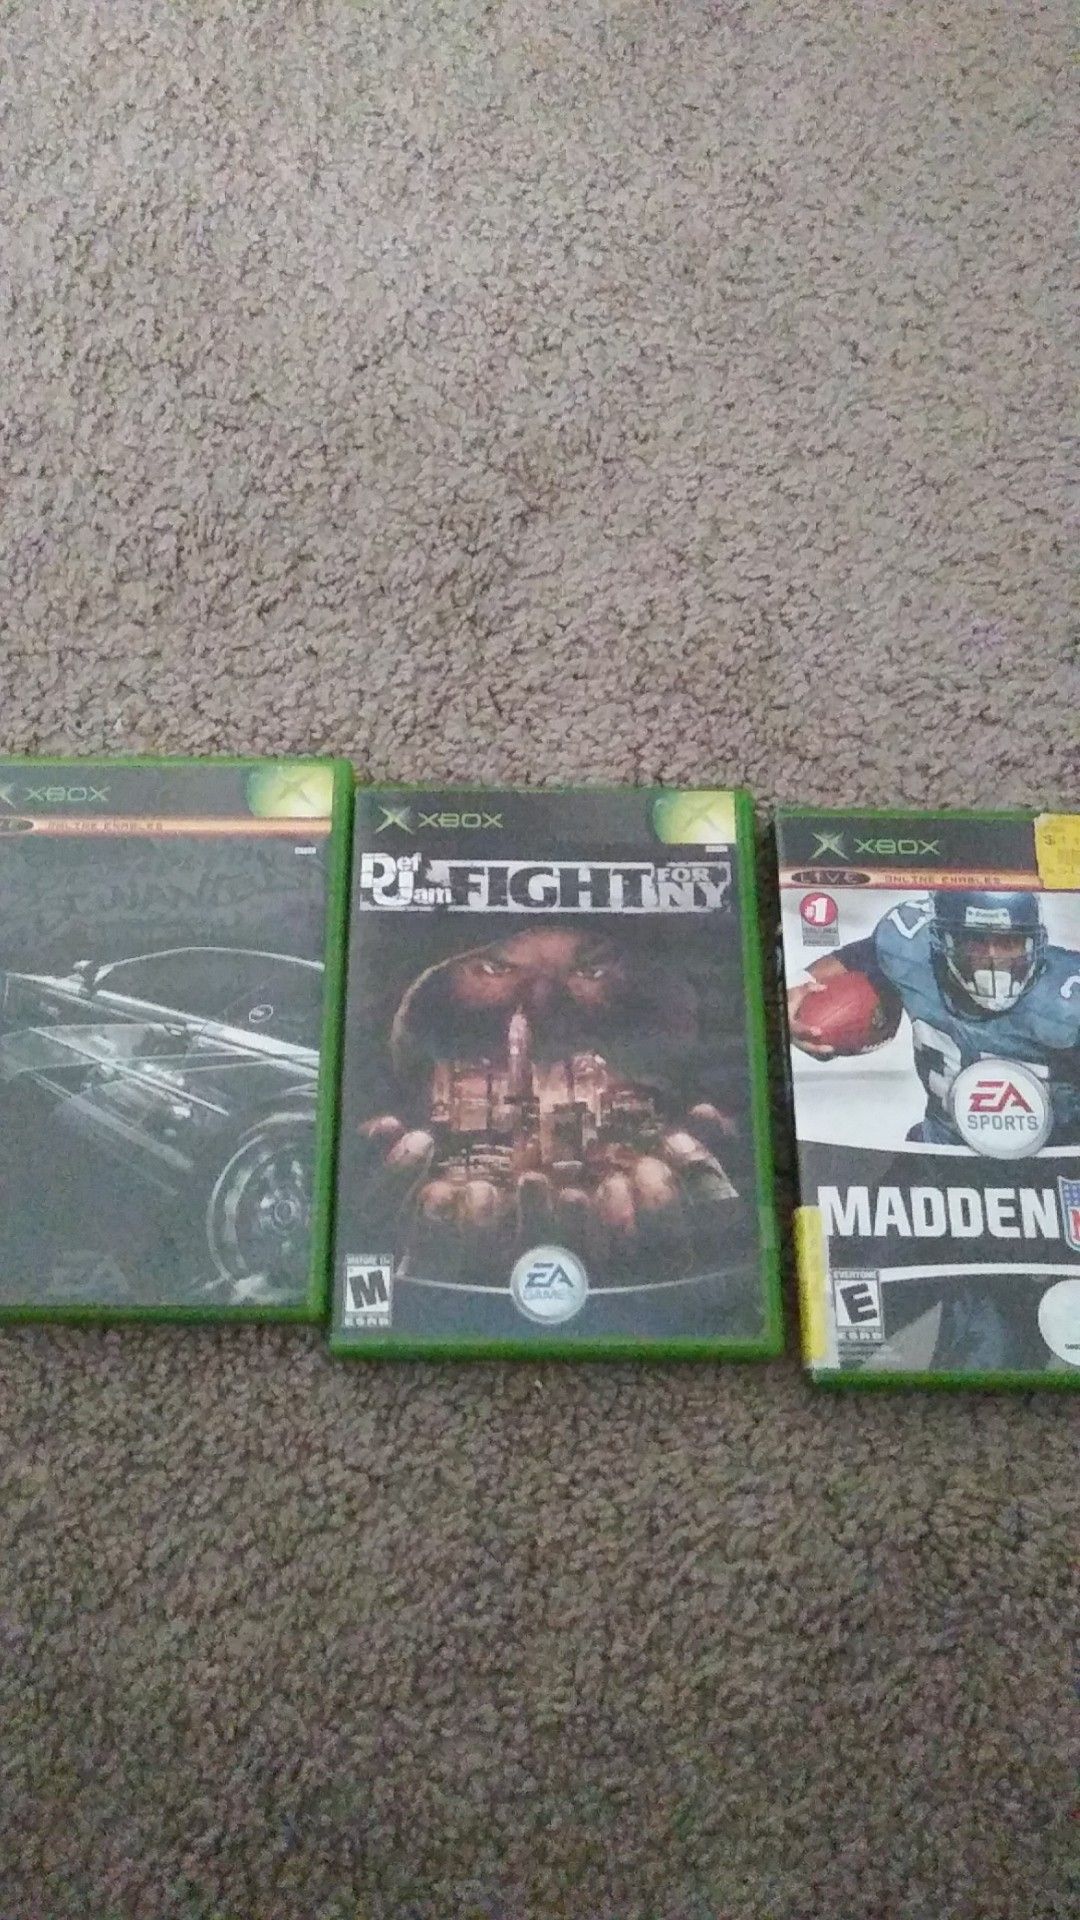 Original Xbox games